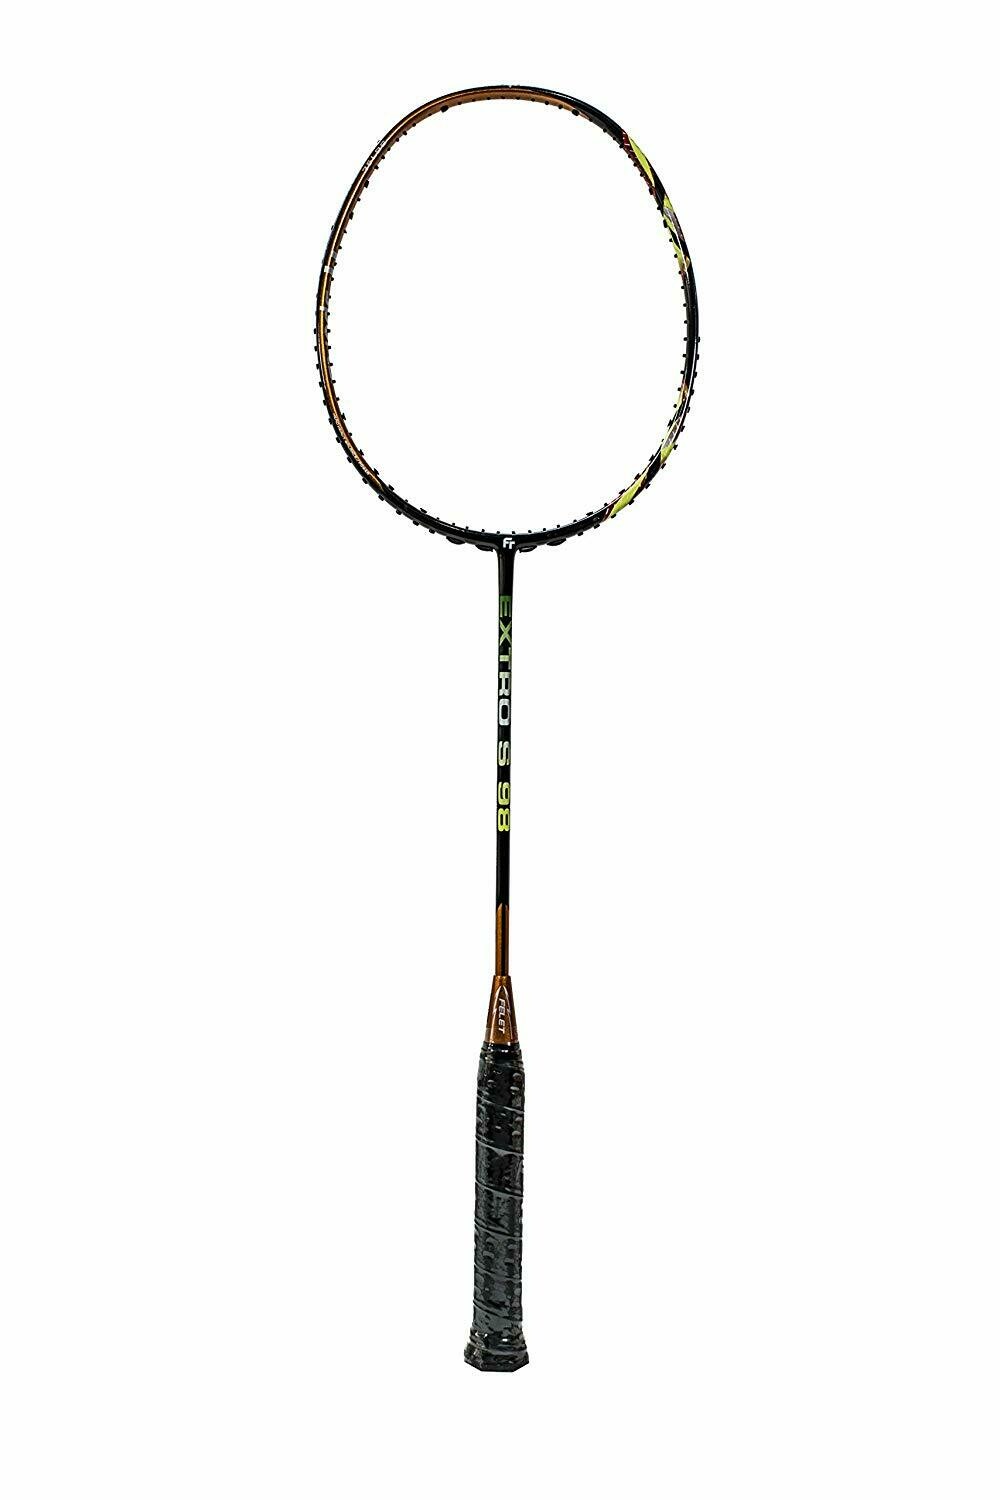 Fleet Extro S 98 Black Unstrung Badminton Racquet